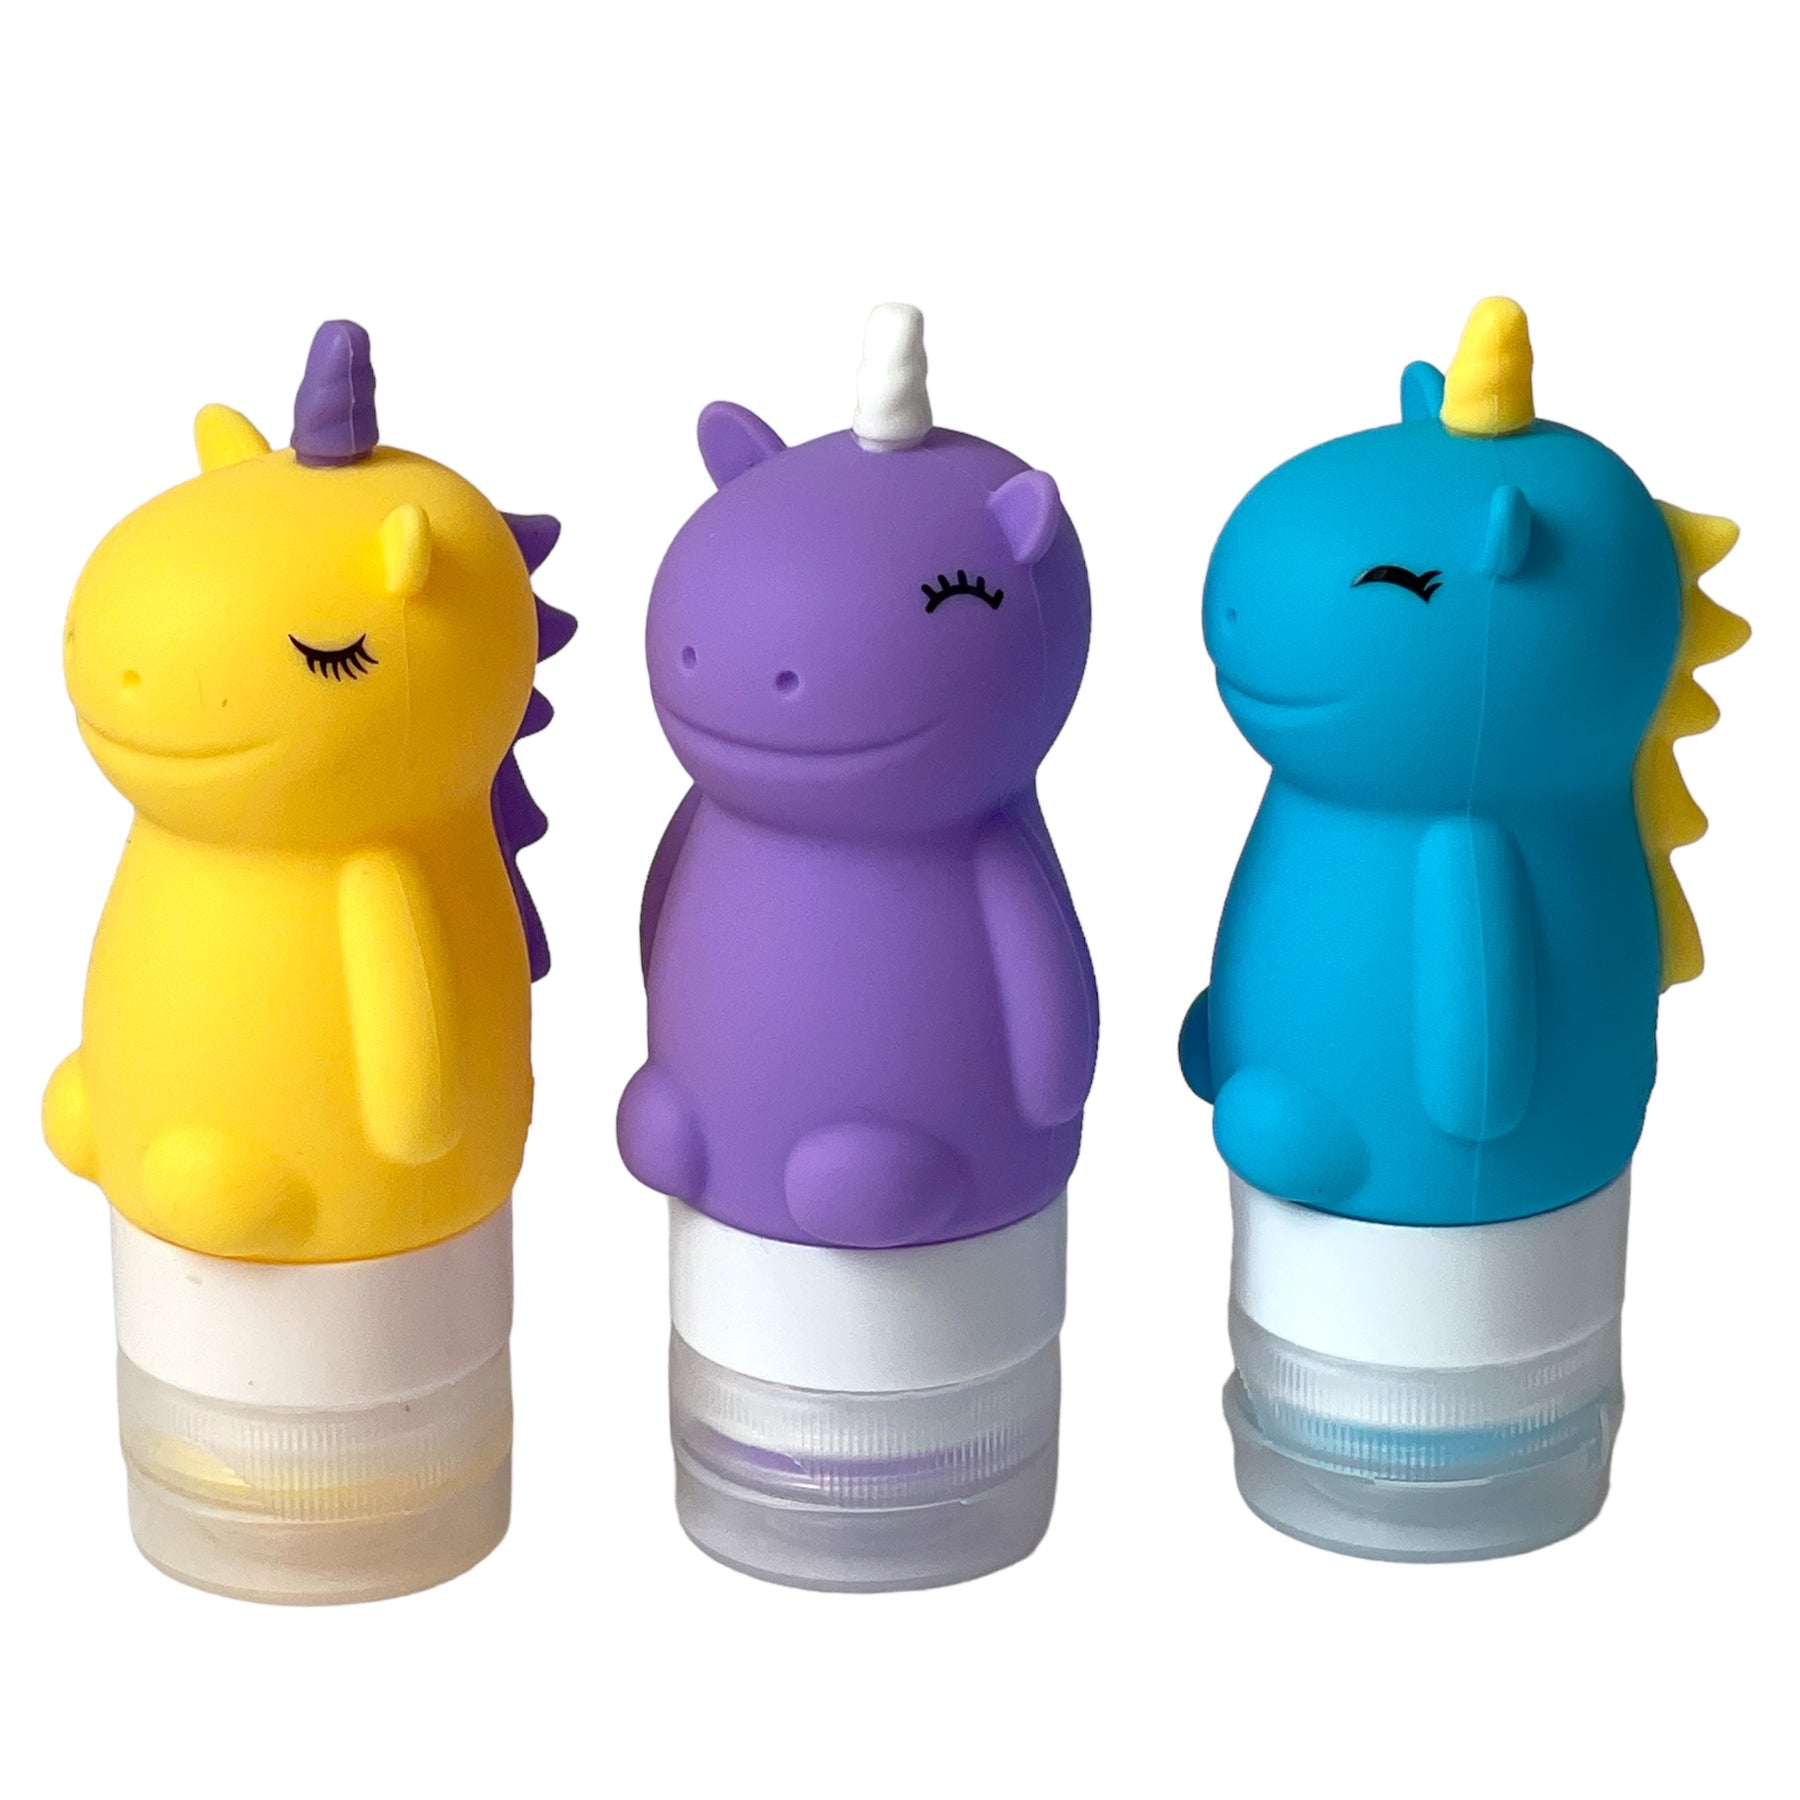 Cute Mini Animal Set Lunchbox Bento Condiment Sauce Bottles